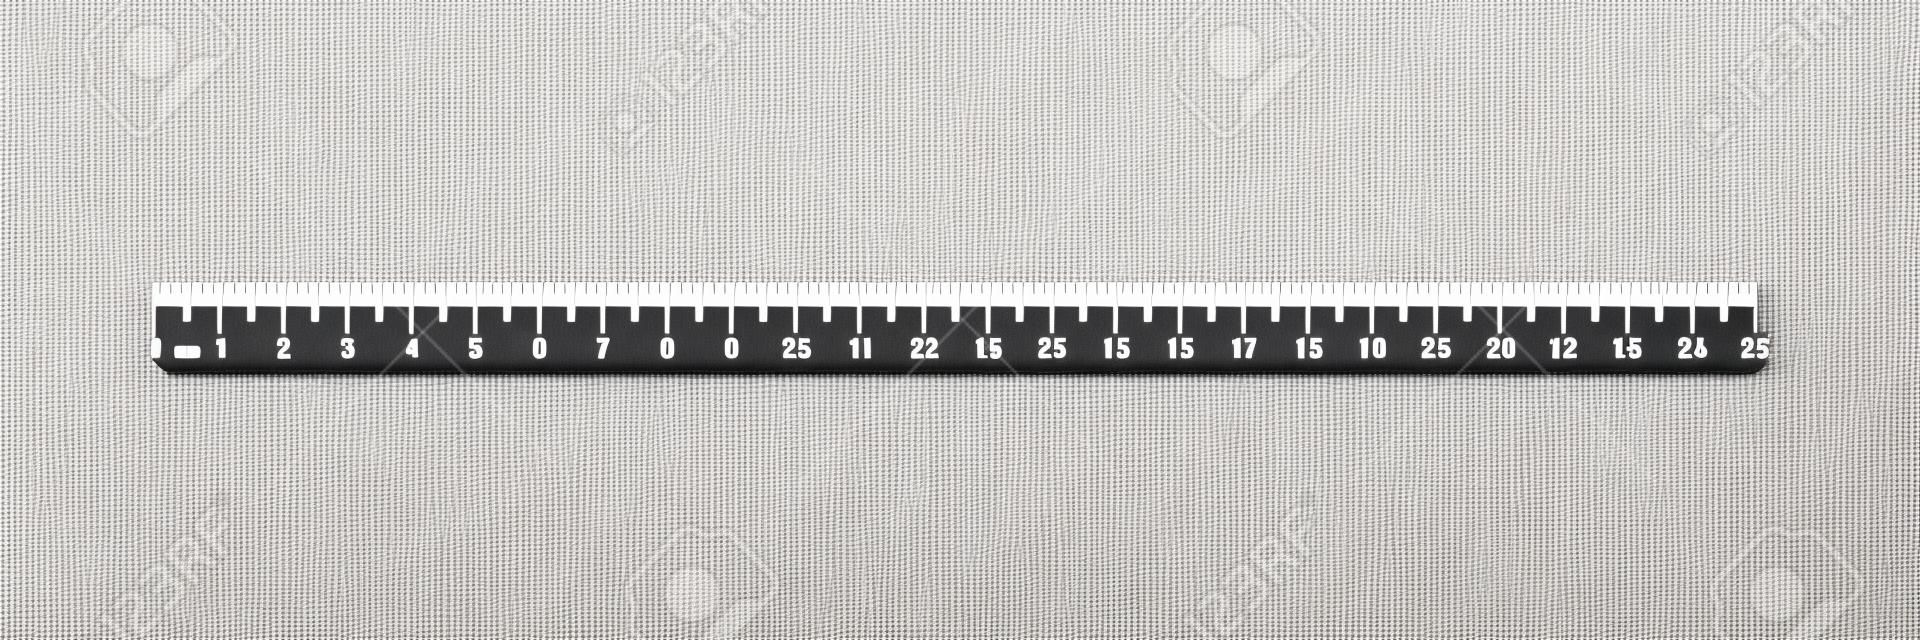 Ruler 25 cm. Measuring tool. Ruler grid 25 cm. Size indicator units. Metric Centimeter size indicators. Vector EPS10